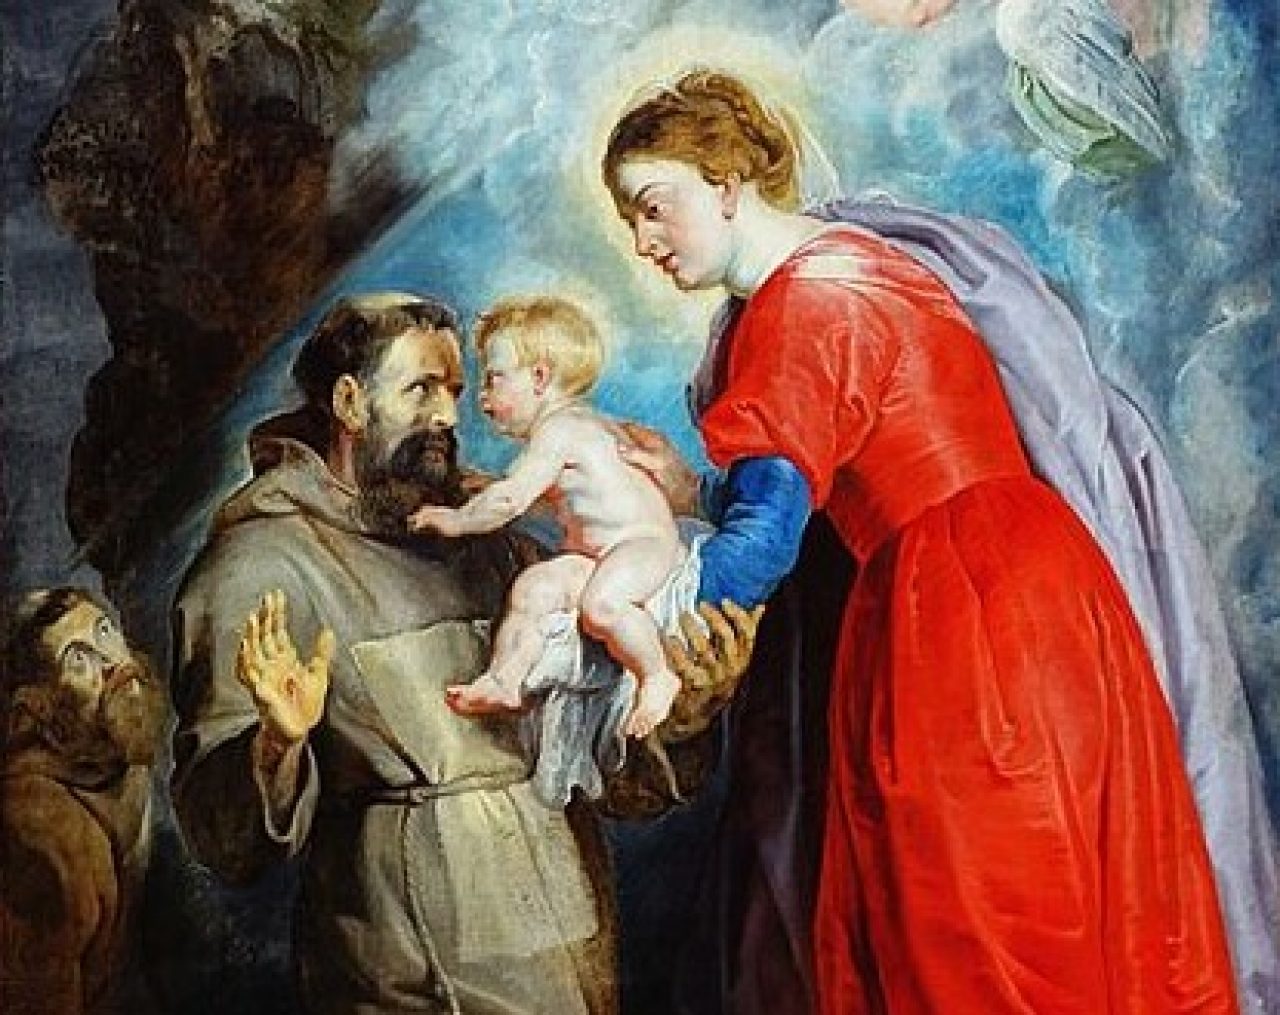 Foto: Peter paul rubens, san francesco riceve il bambin gesù dalle mani della vergine, 1617 ca.jpg